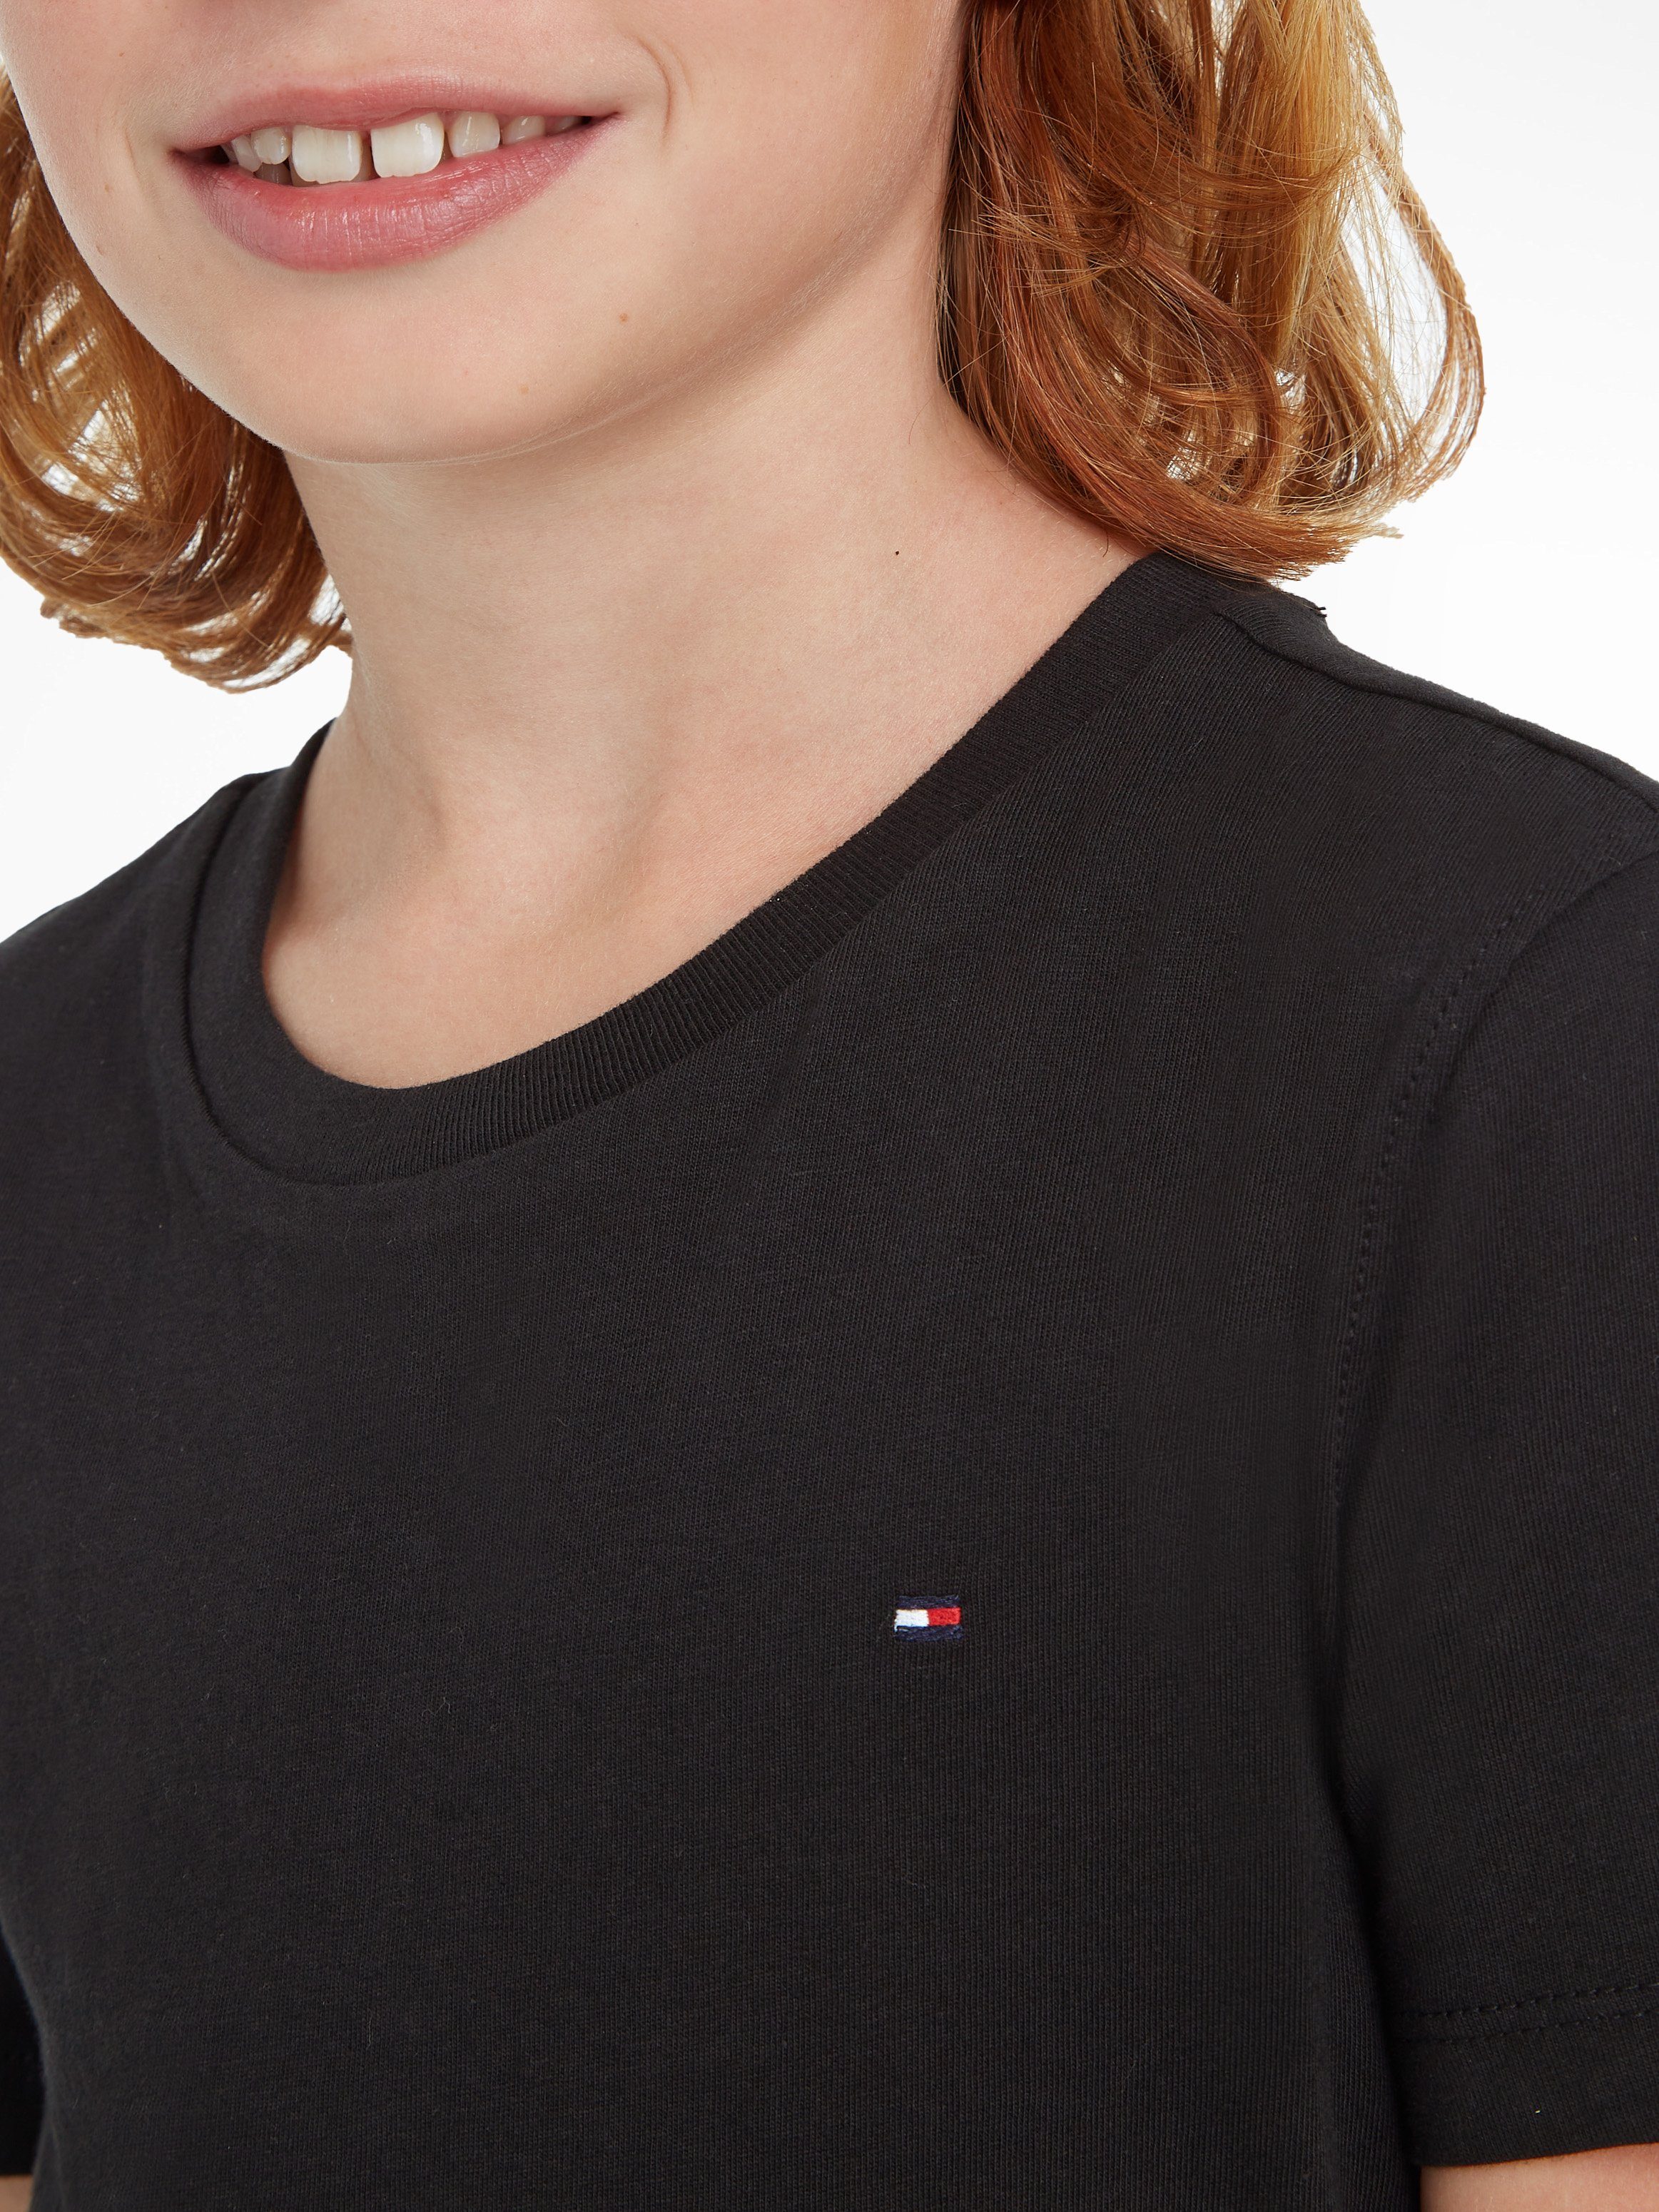 Tommy Hilfiger T-Shirt BOYS BASIC Jungen KNIT Junior CN MiniMe,für Kids Kinder